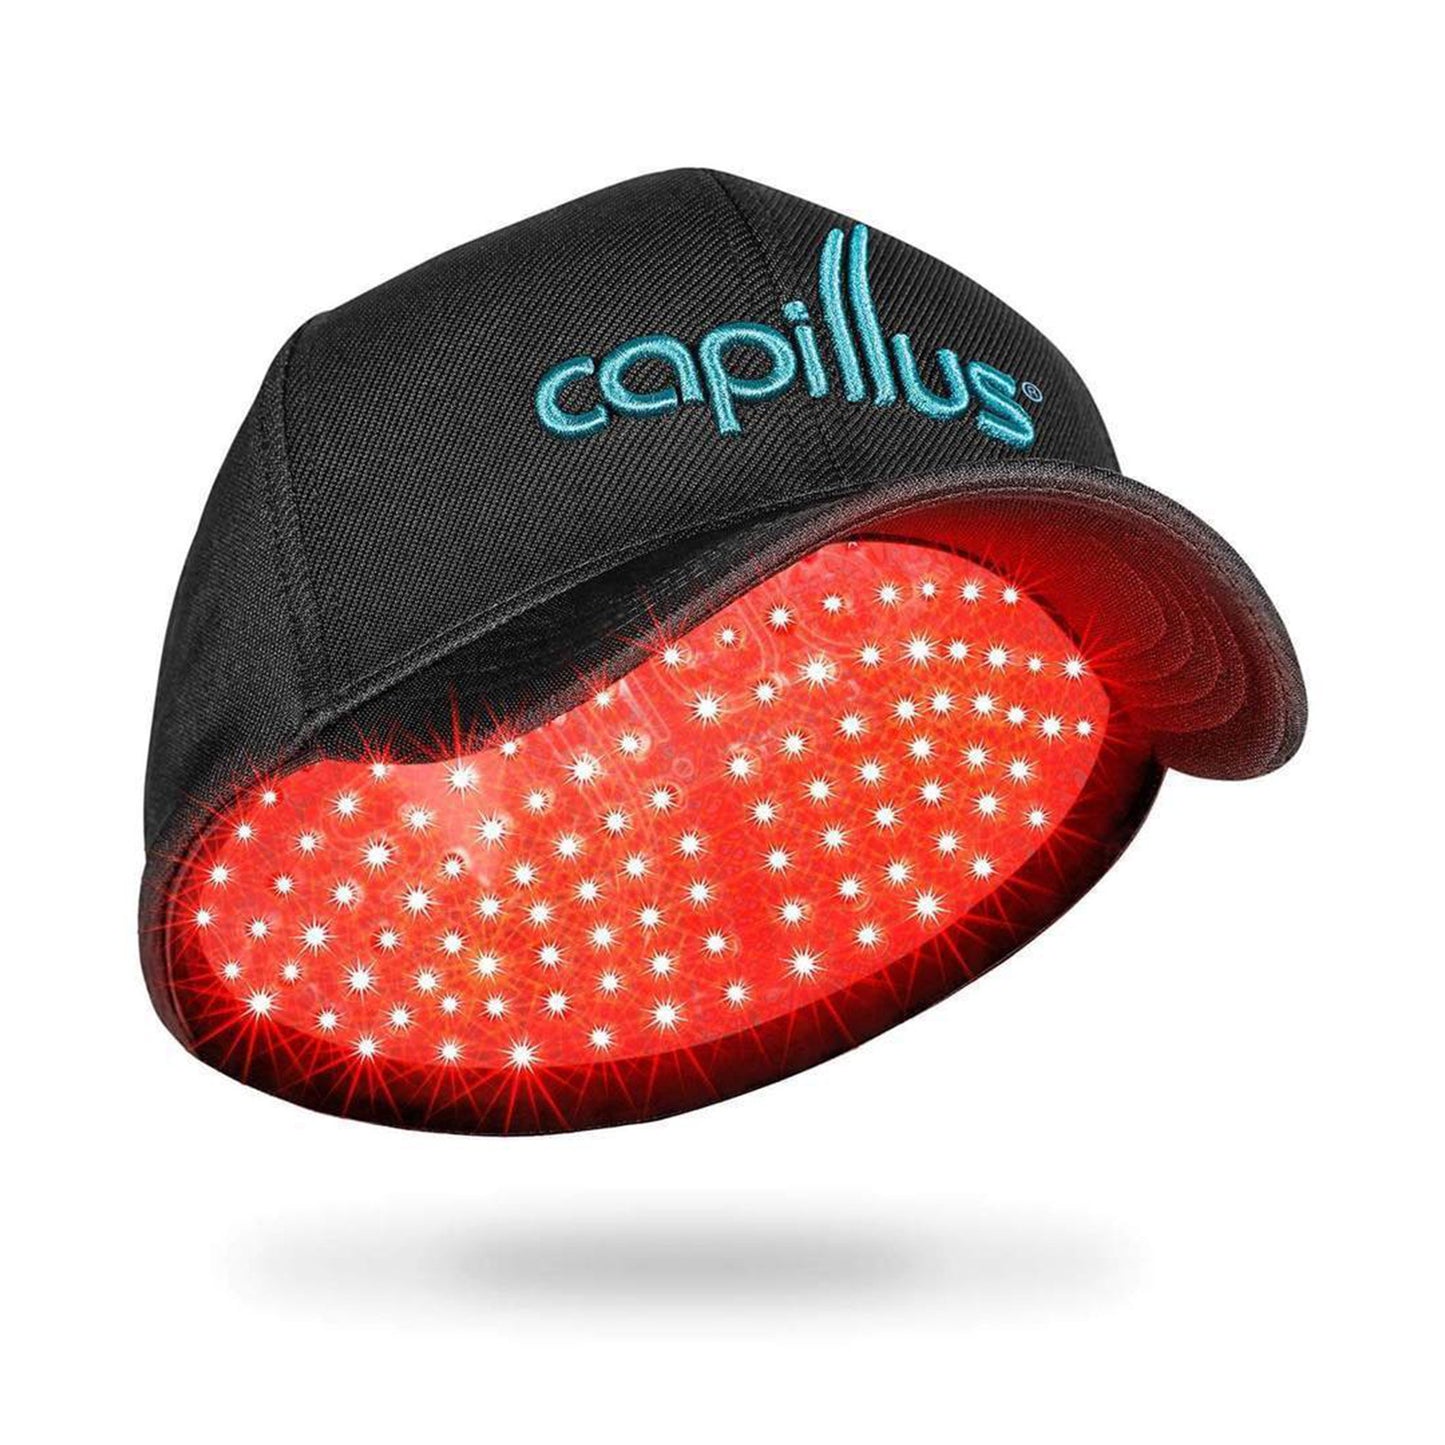 CapillusRX (312 Diode) Hair Regrowth Laser Cap | Laser Device - Hair Club